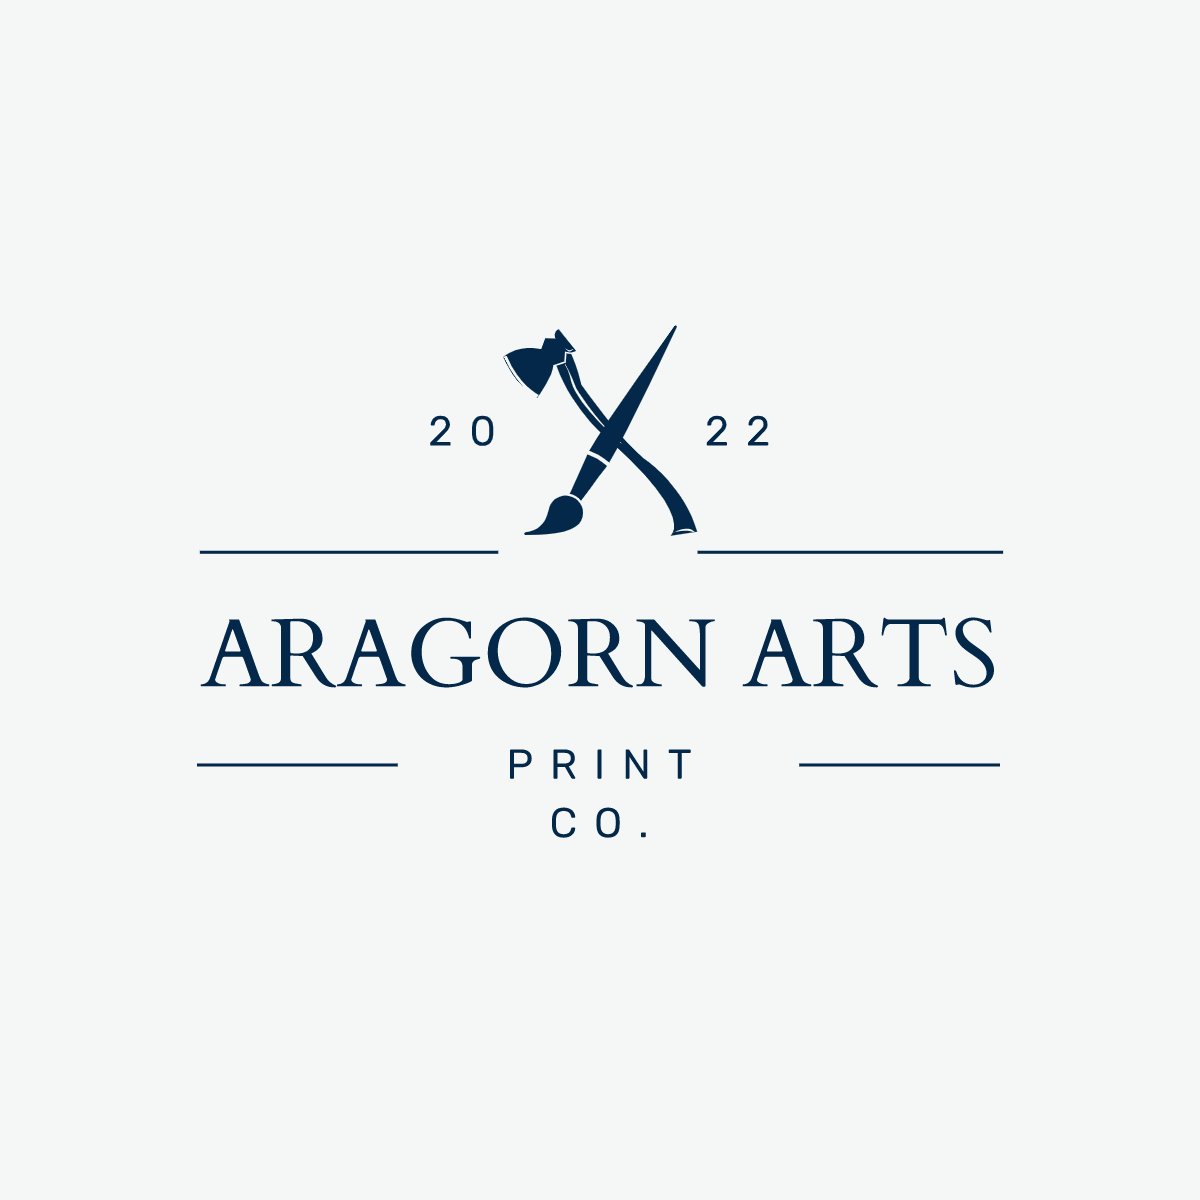 Aragorn Arts no rings.jpg